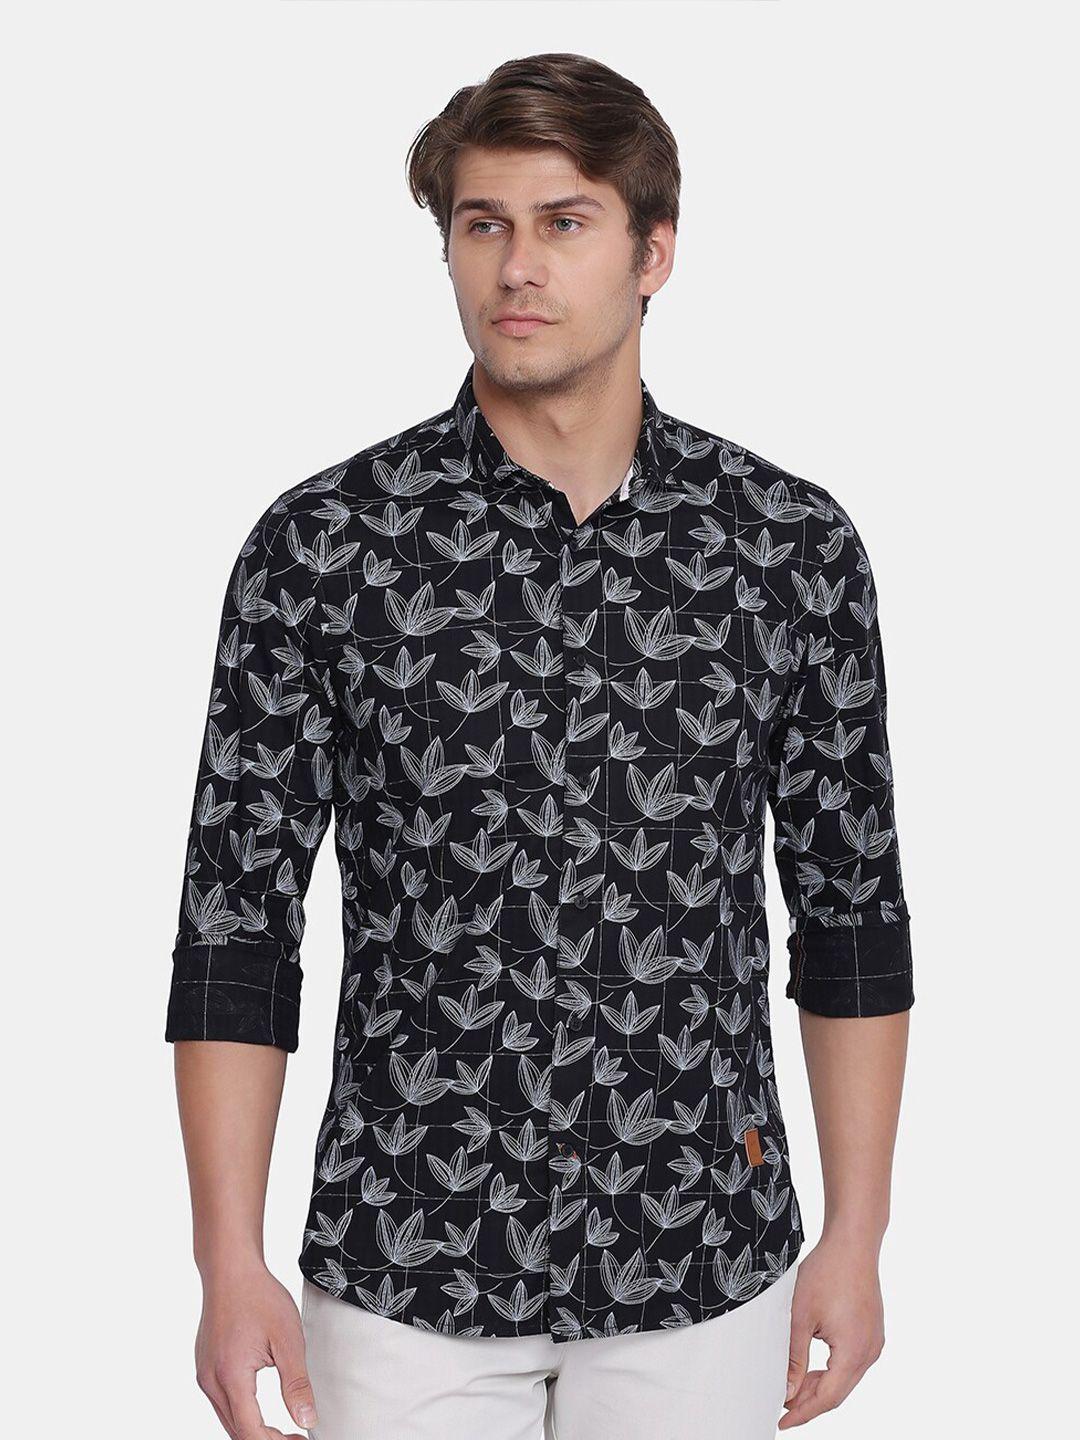 blackberrys men black phoenix skinny fit floral printed casual shirt